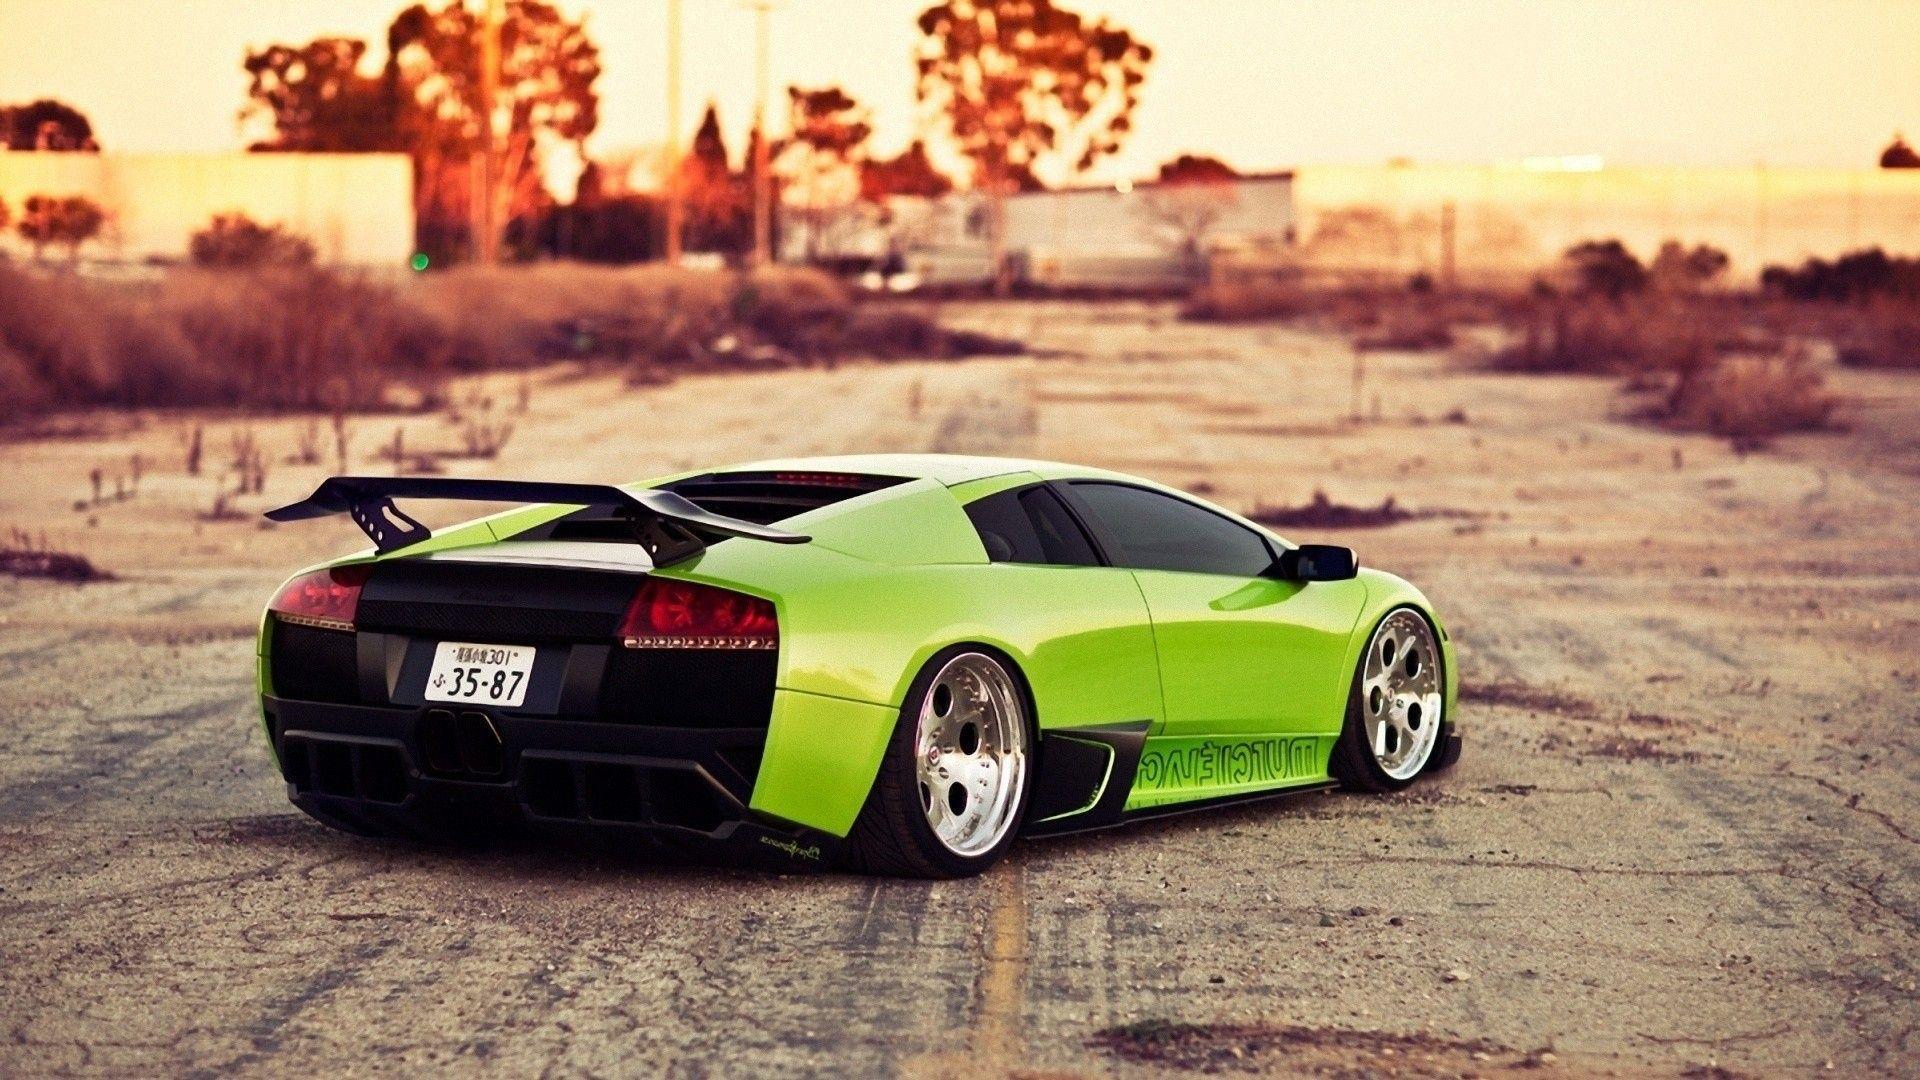 Wallpaper.wiki Green Lamborghini Murcielago 1080p Car Wallpaper PIC